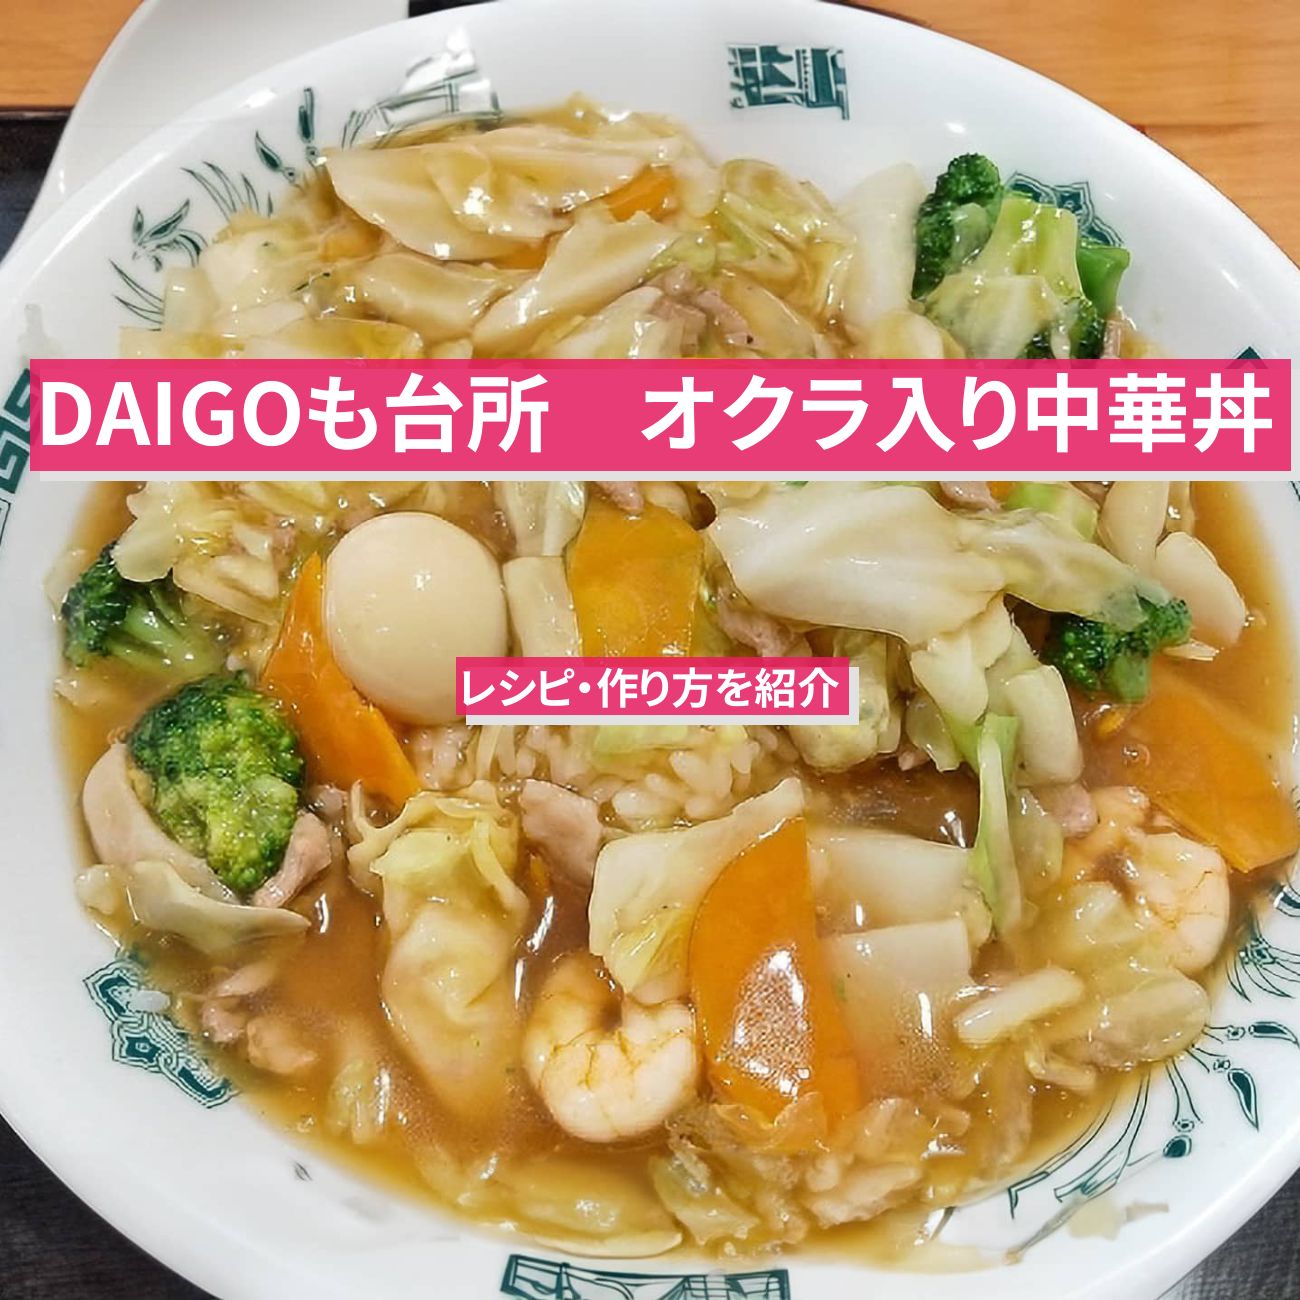 【DAIGOも台所】『オクラ入り中華丼』のレシピ・作り方を紹介〔ダイゴも台所〕